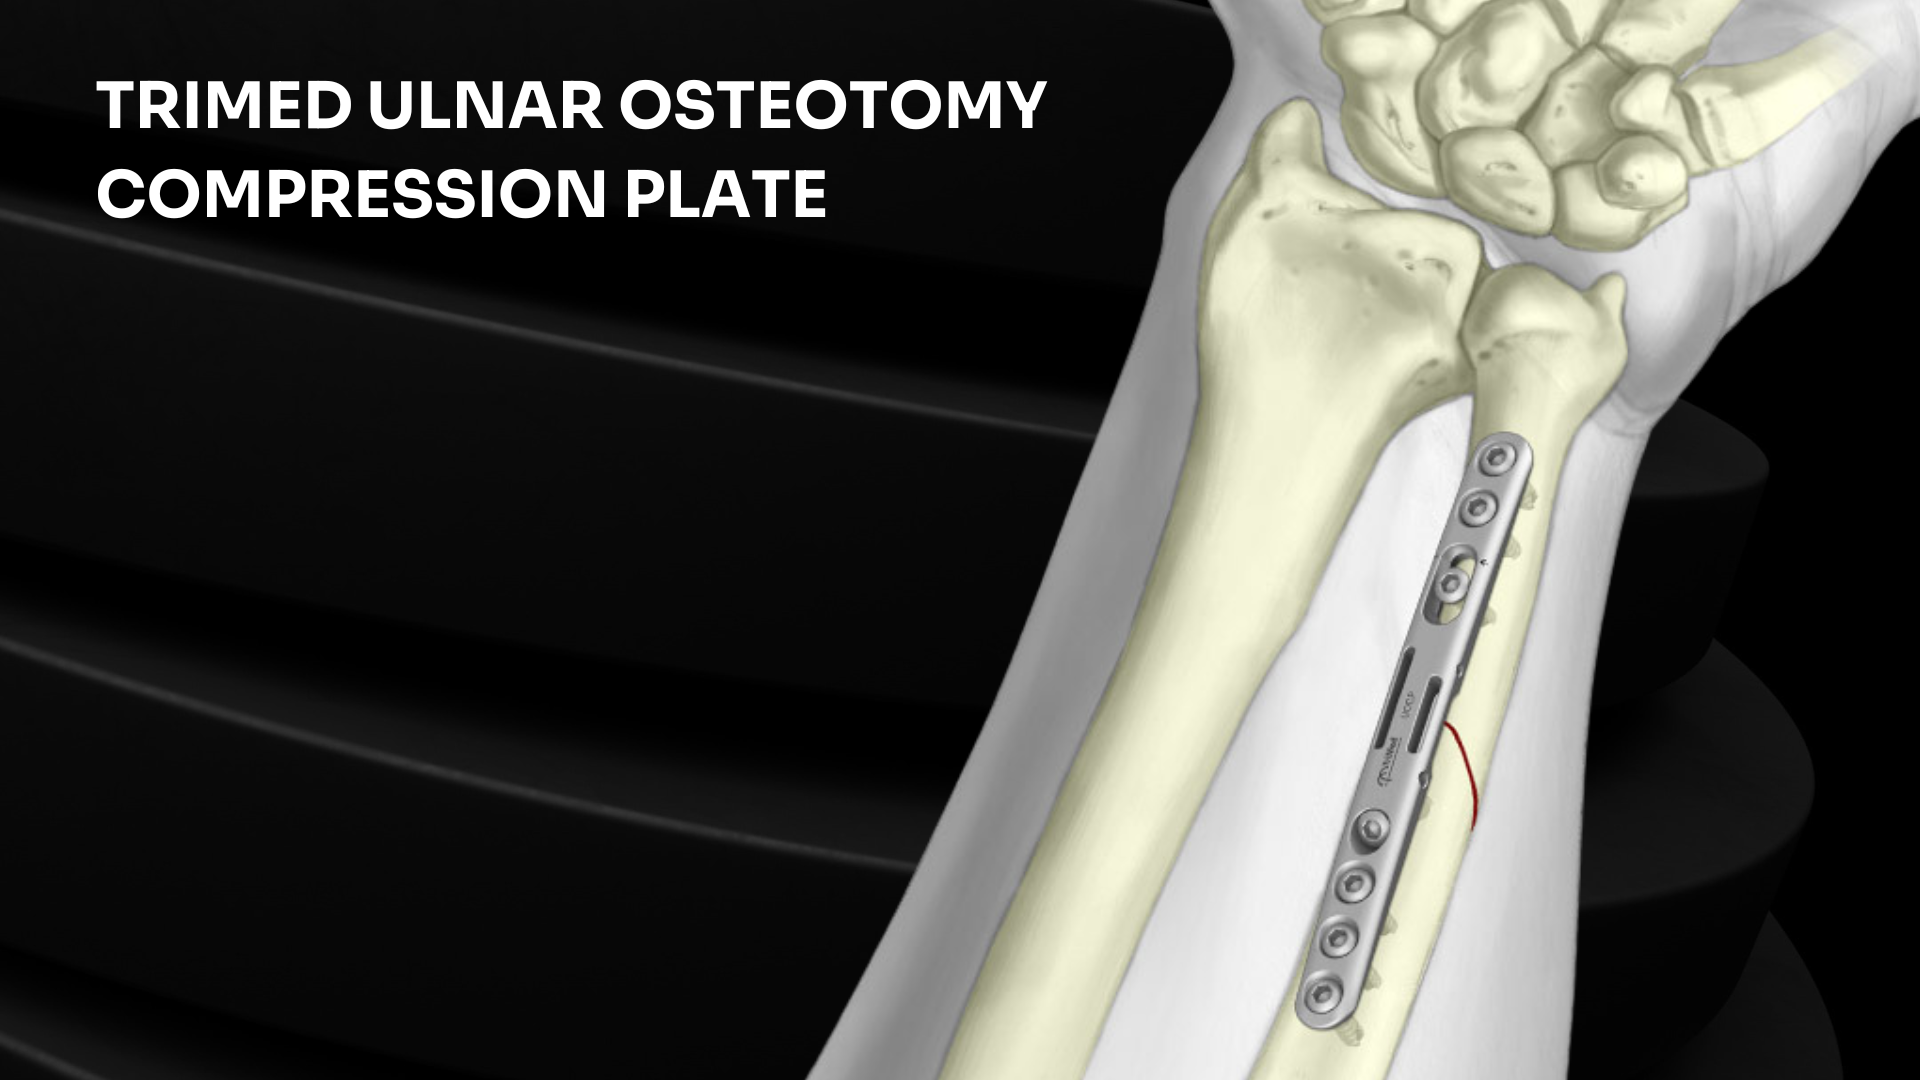 TriMed - Ulnar Osteotomy compression plate